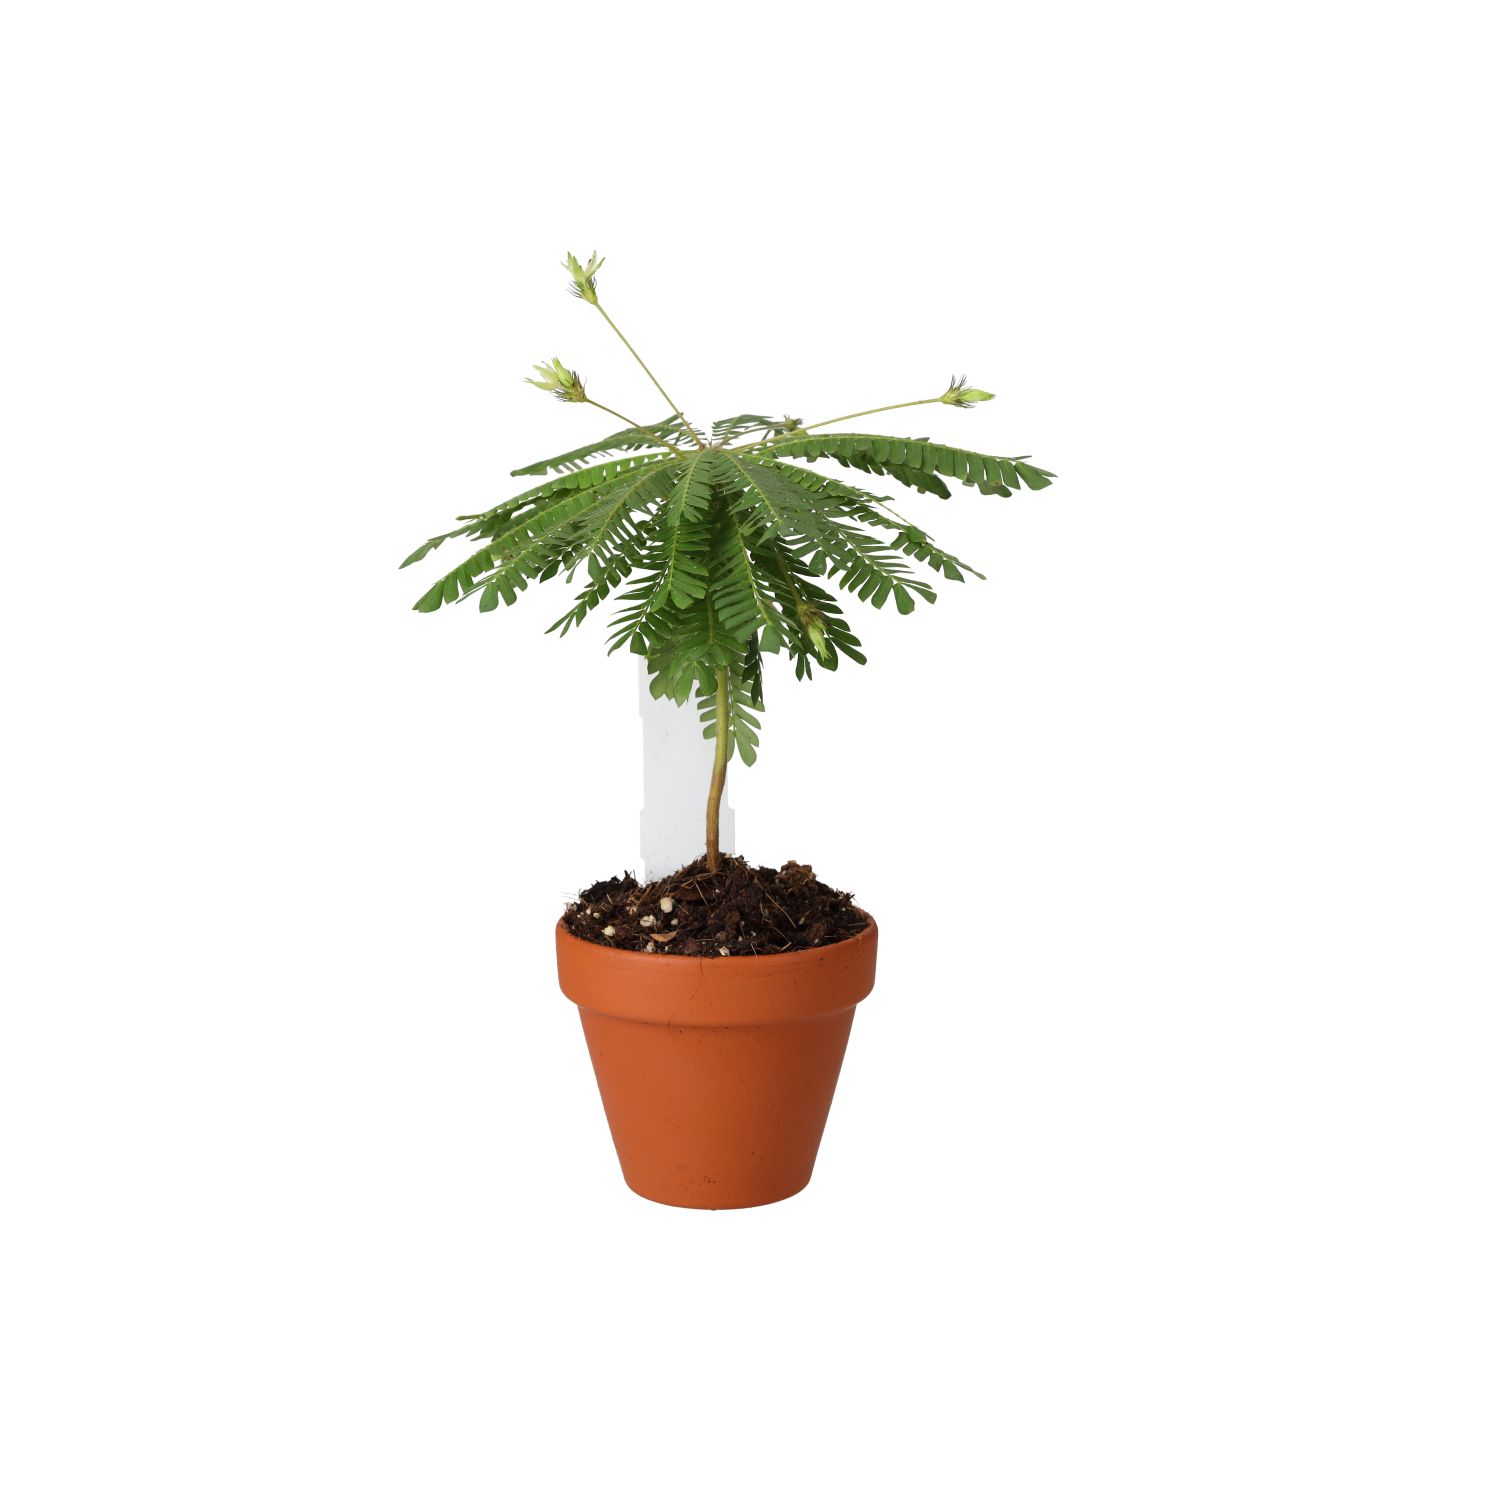 PR Live plant. Little Tree Plant (Medium)